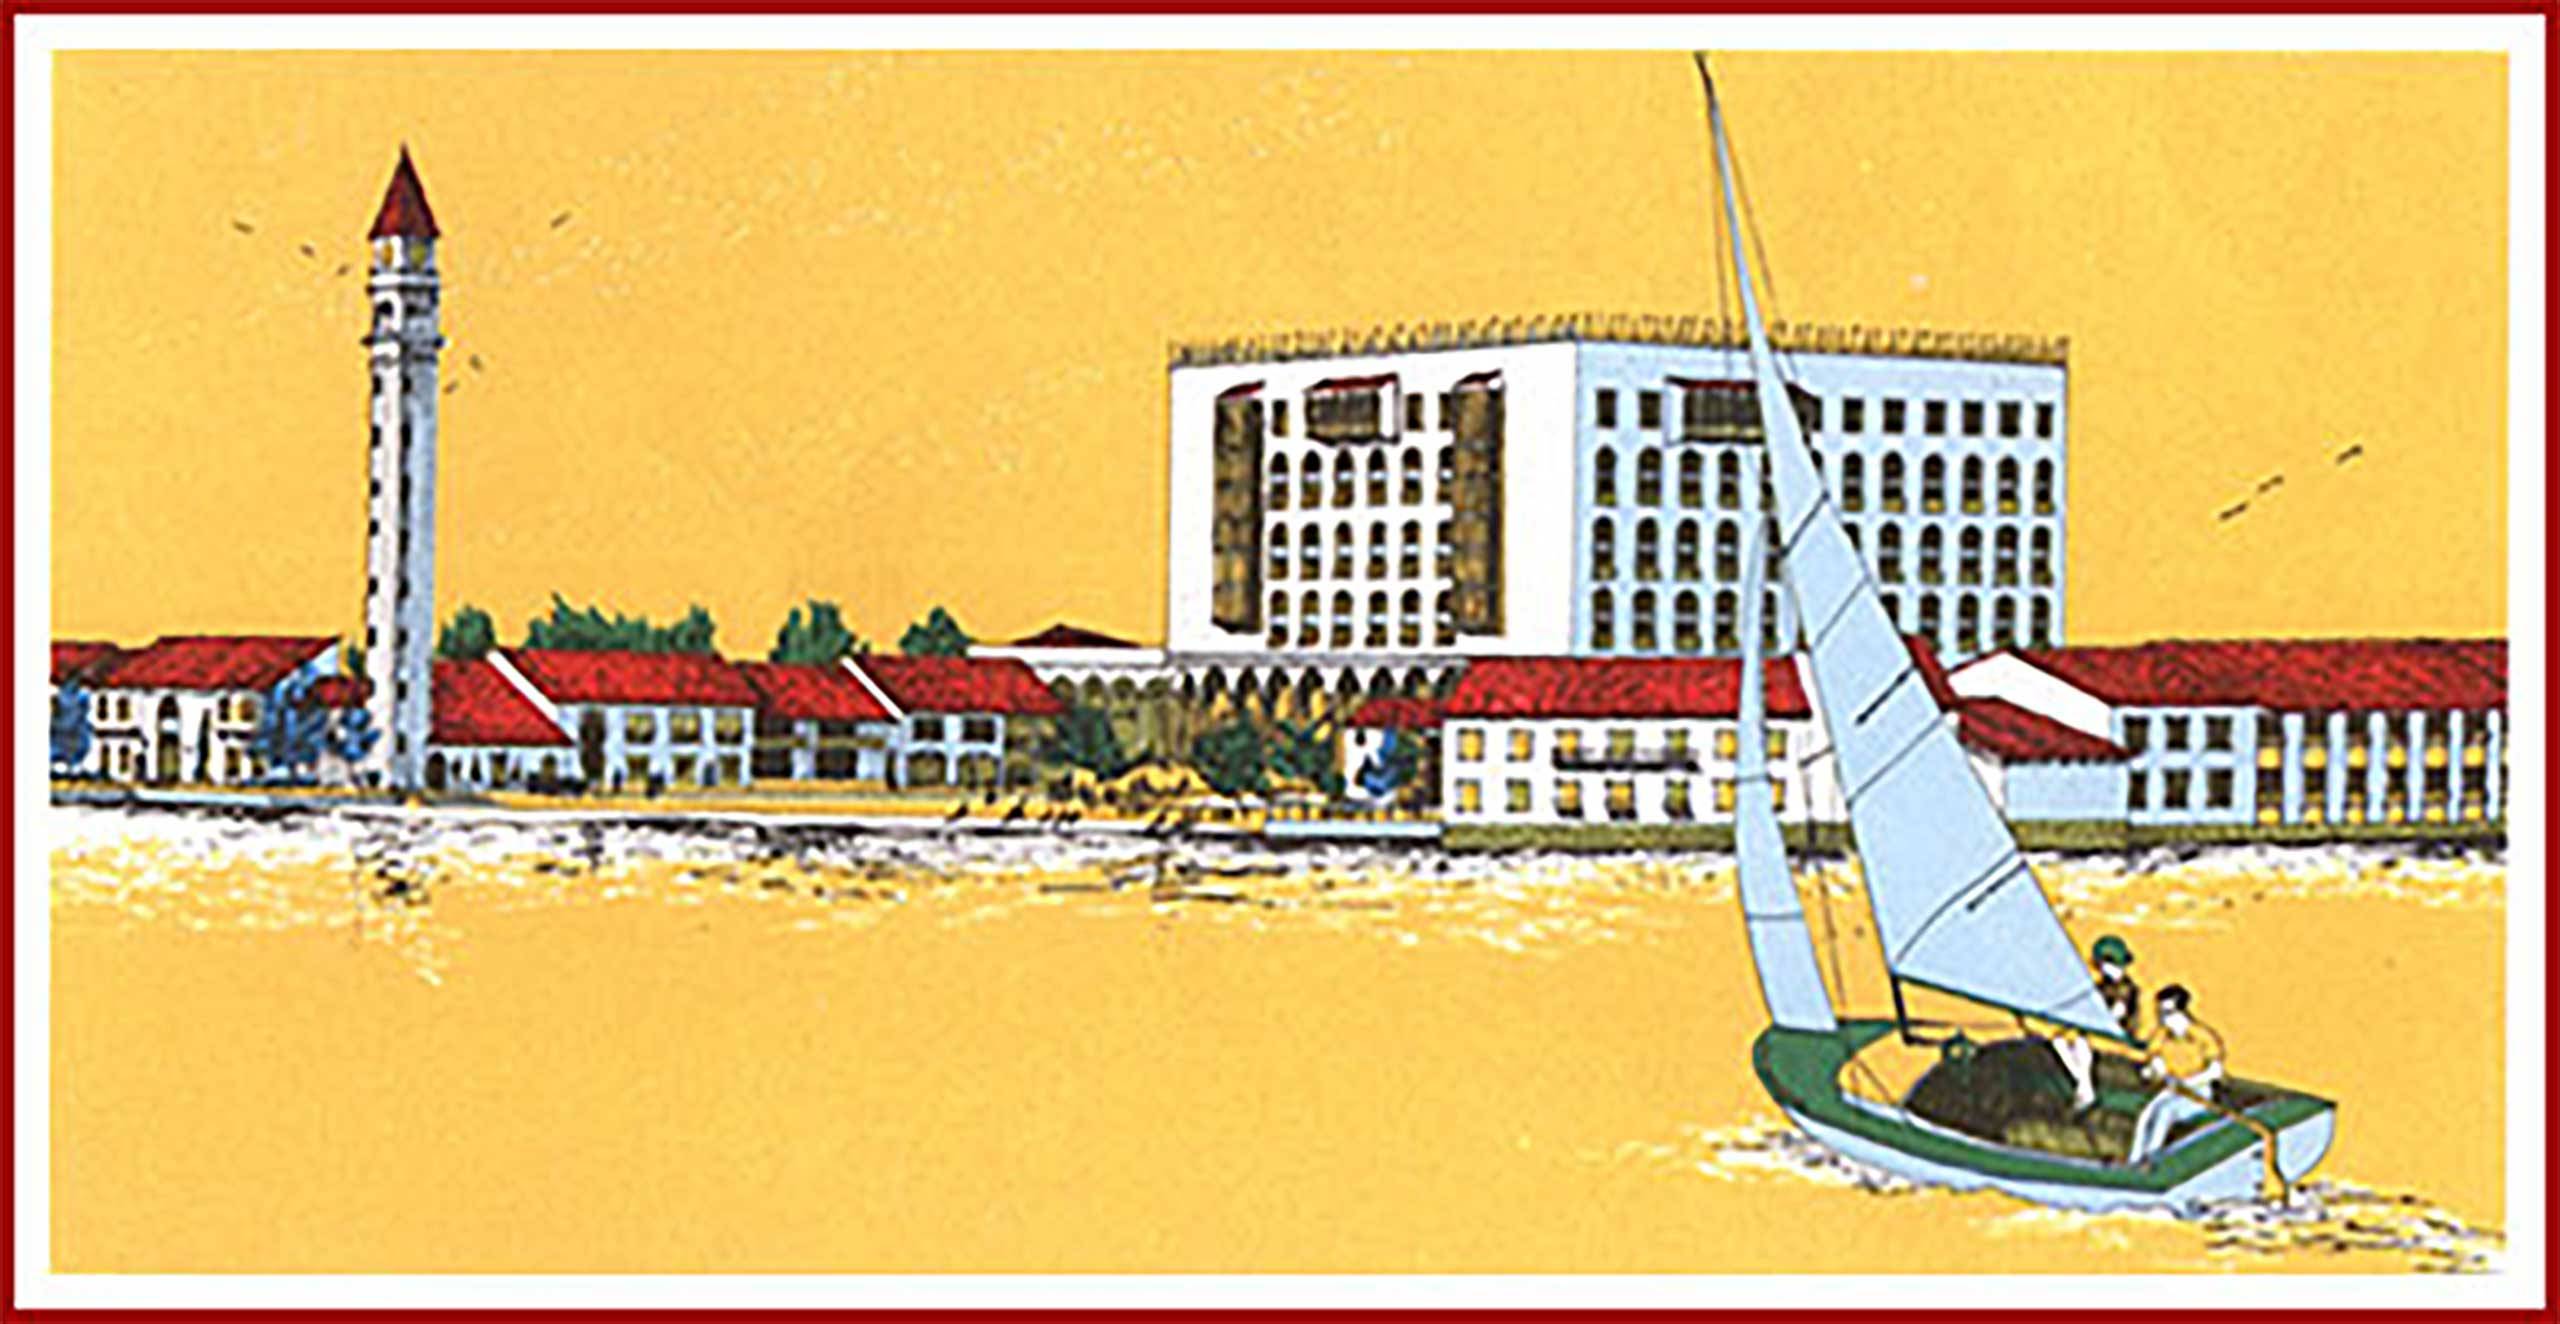 Venetian Resort shown on pre-1971 concept art